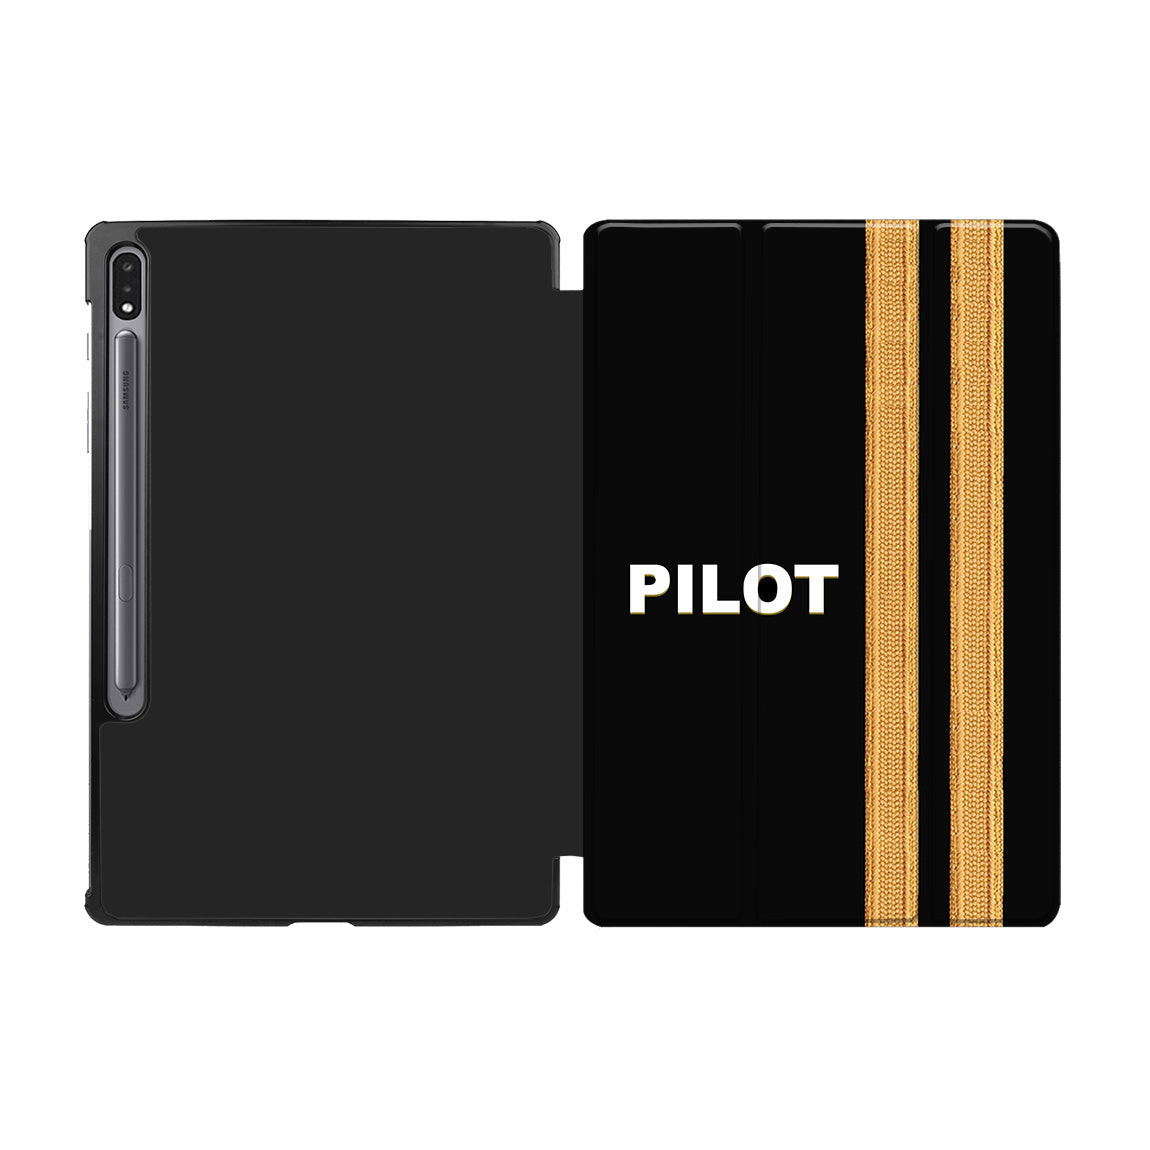 Pilot & Epaulettes (2 Lines) Designed Samsung Tablet Cases